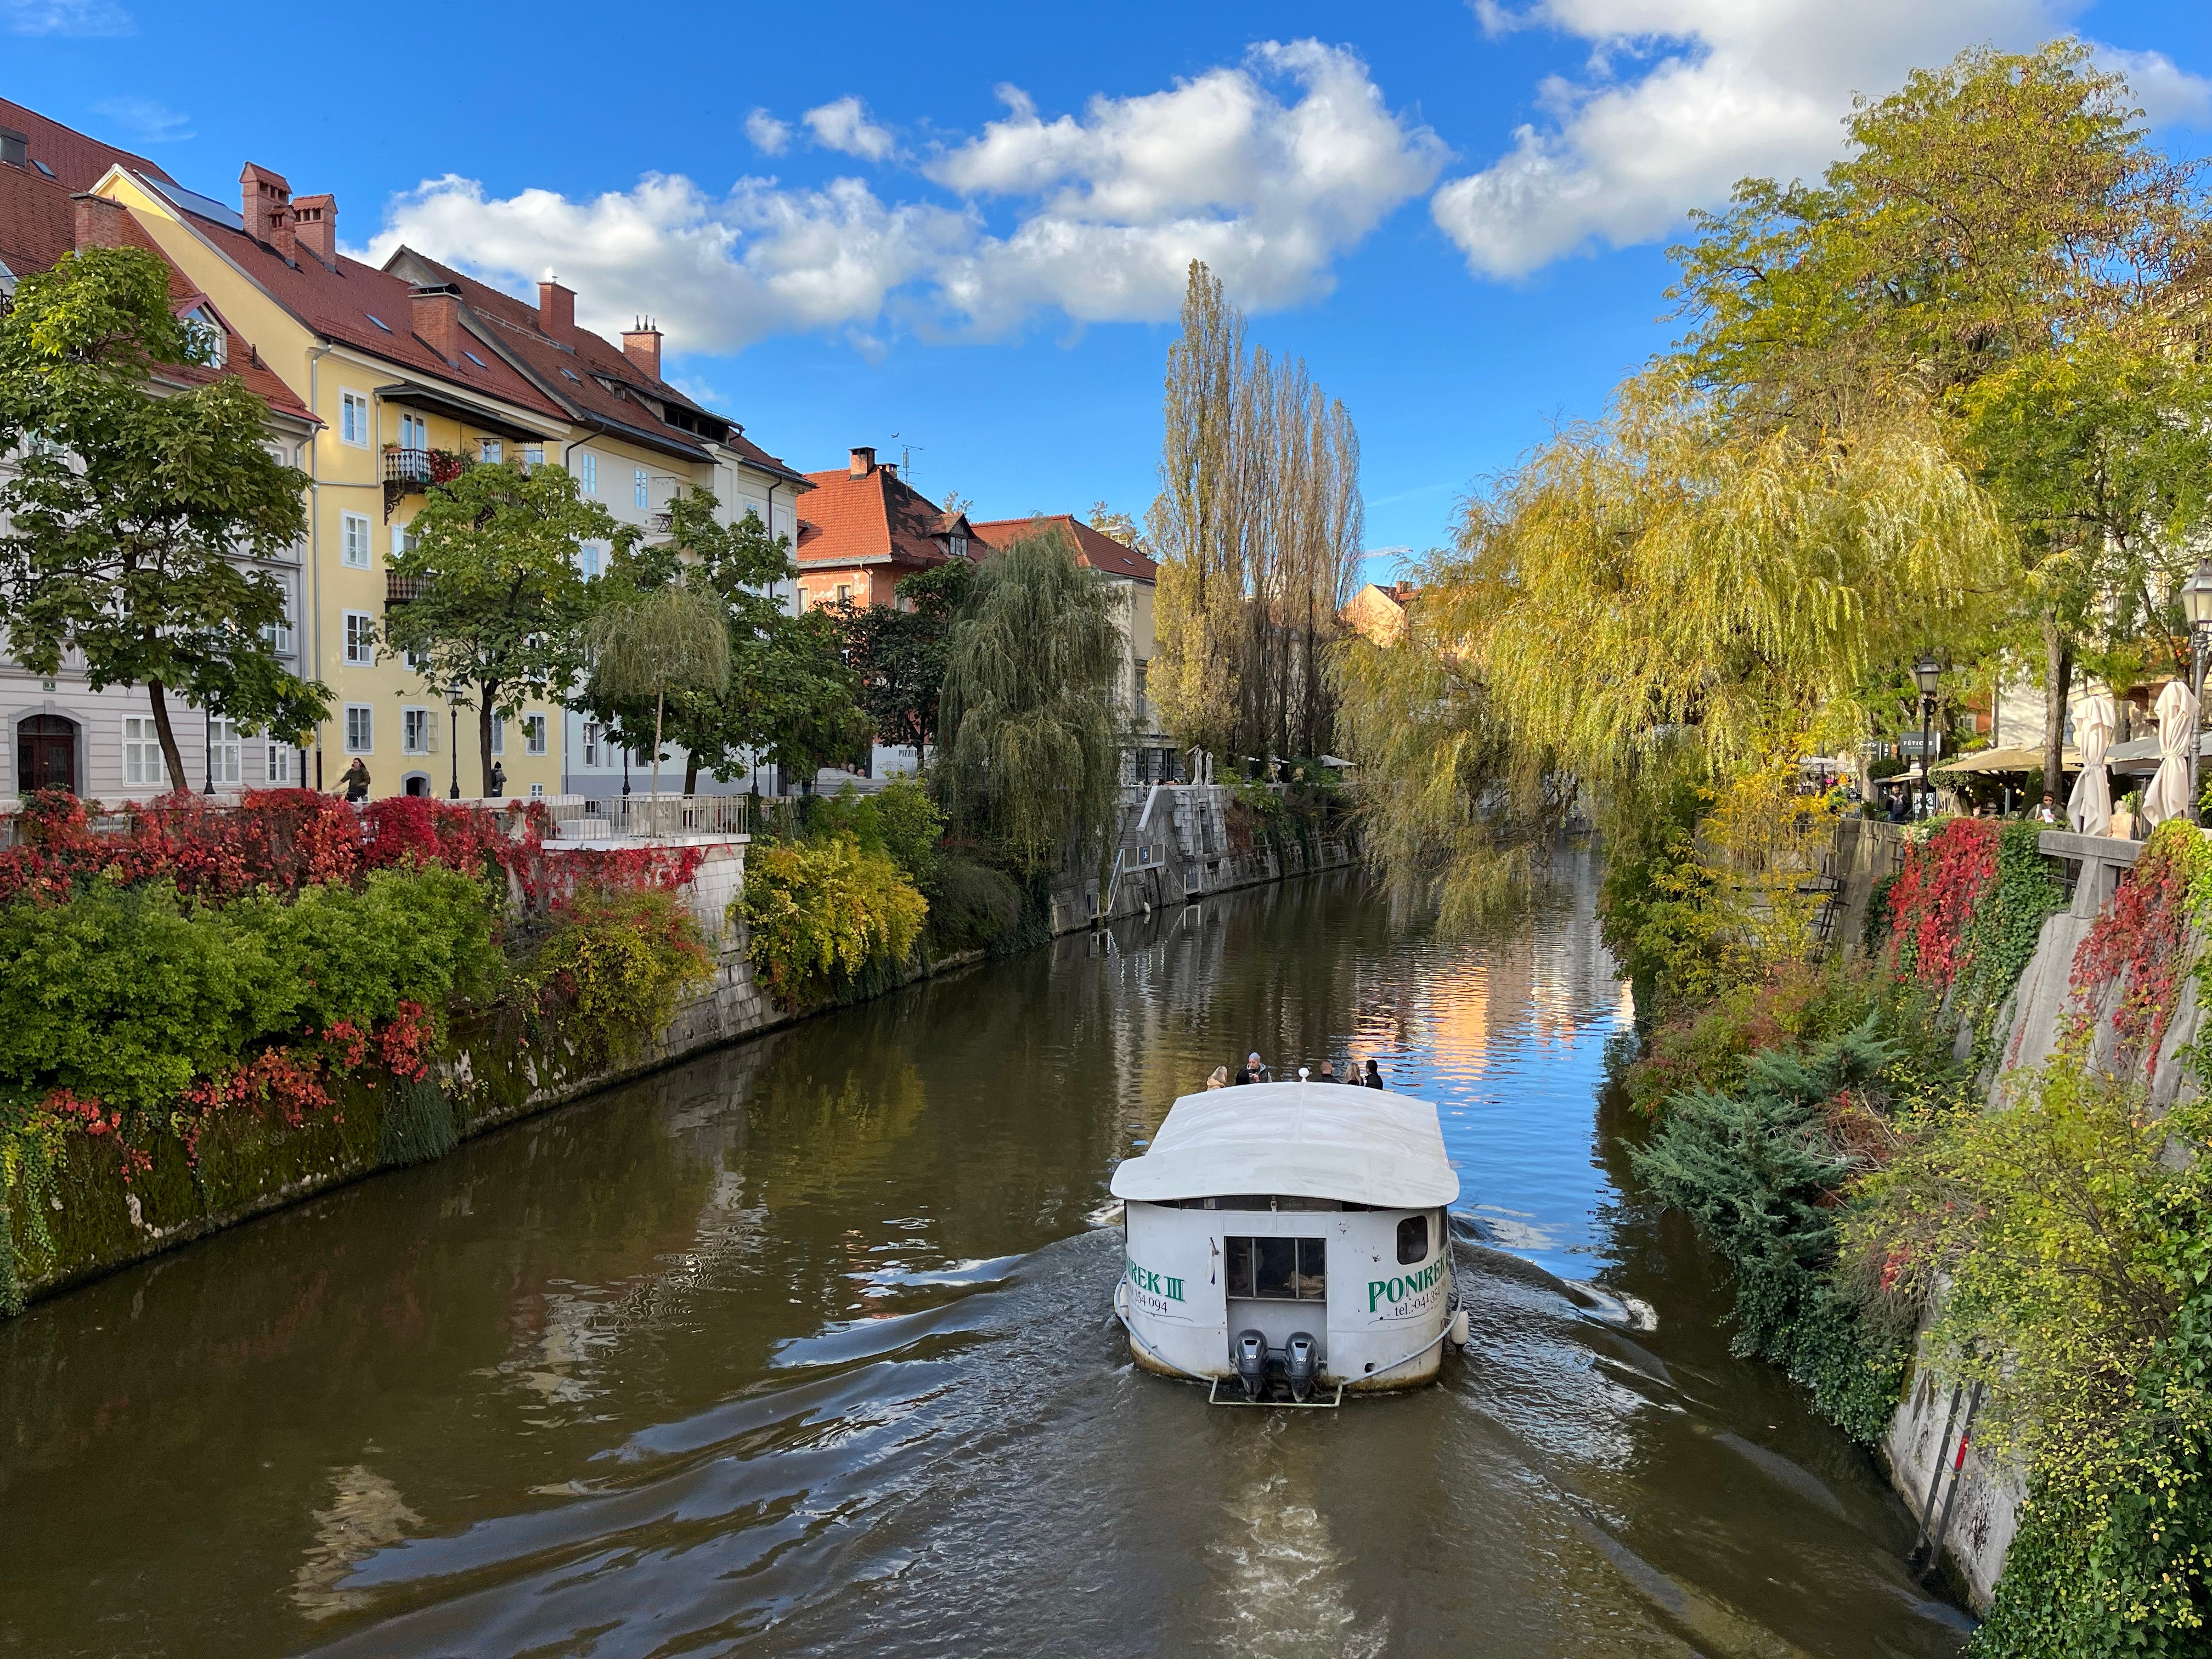 Ljubljana is one of Europe’s greenest capitals